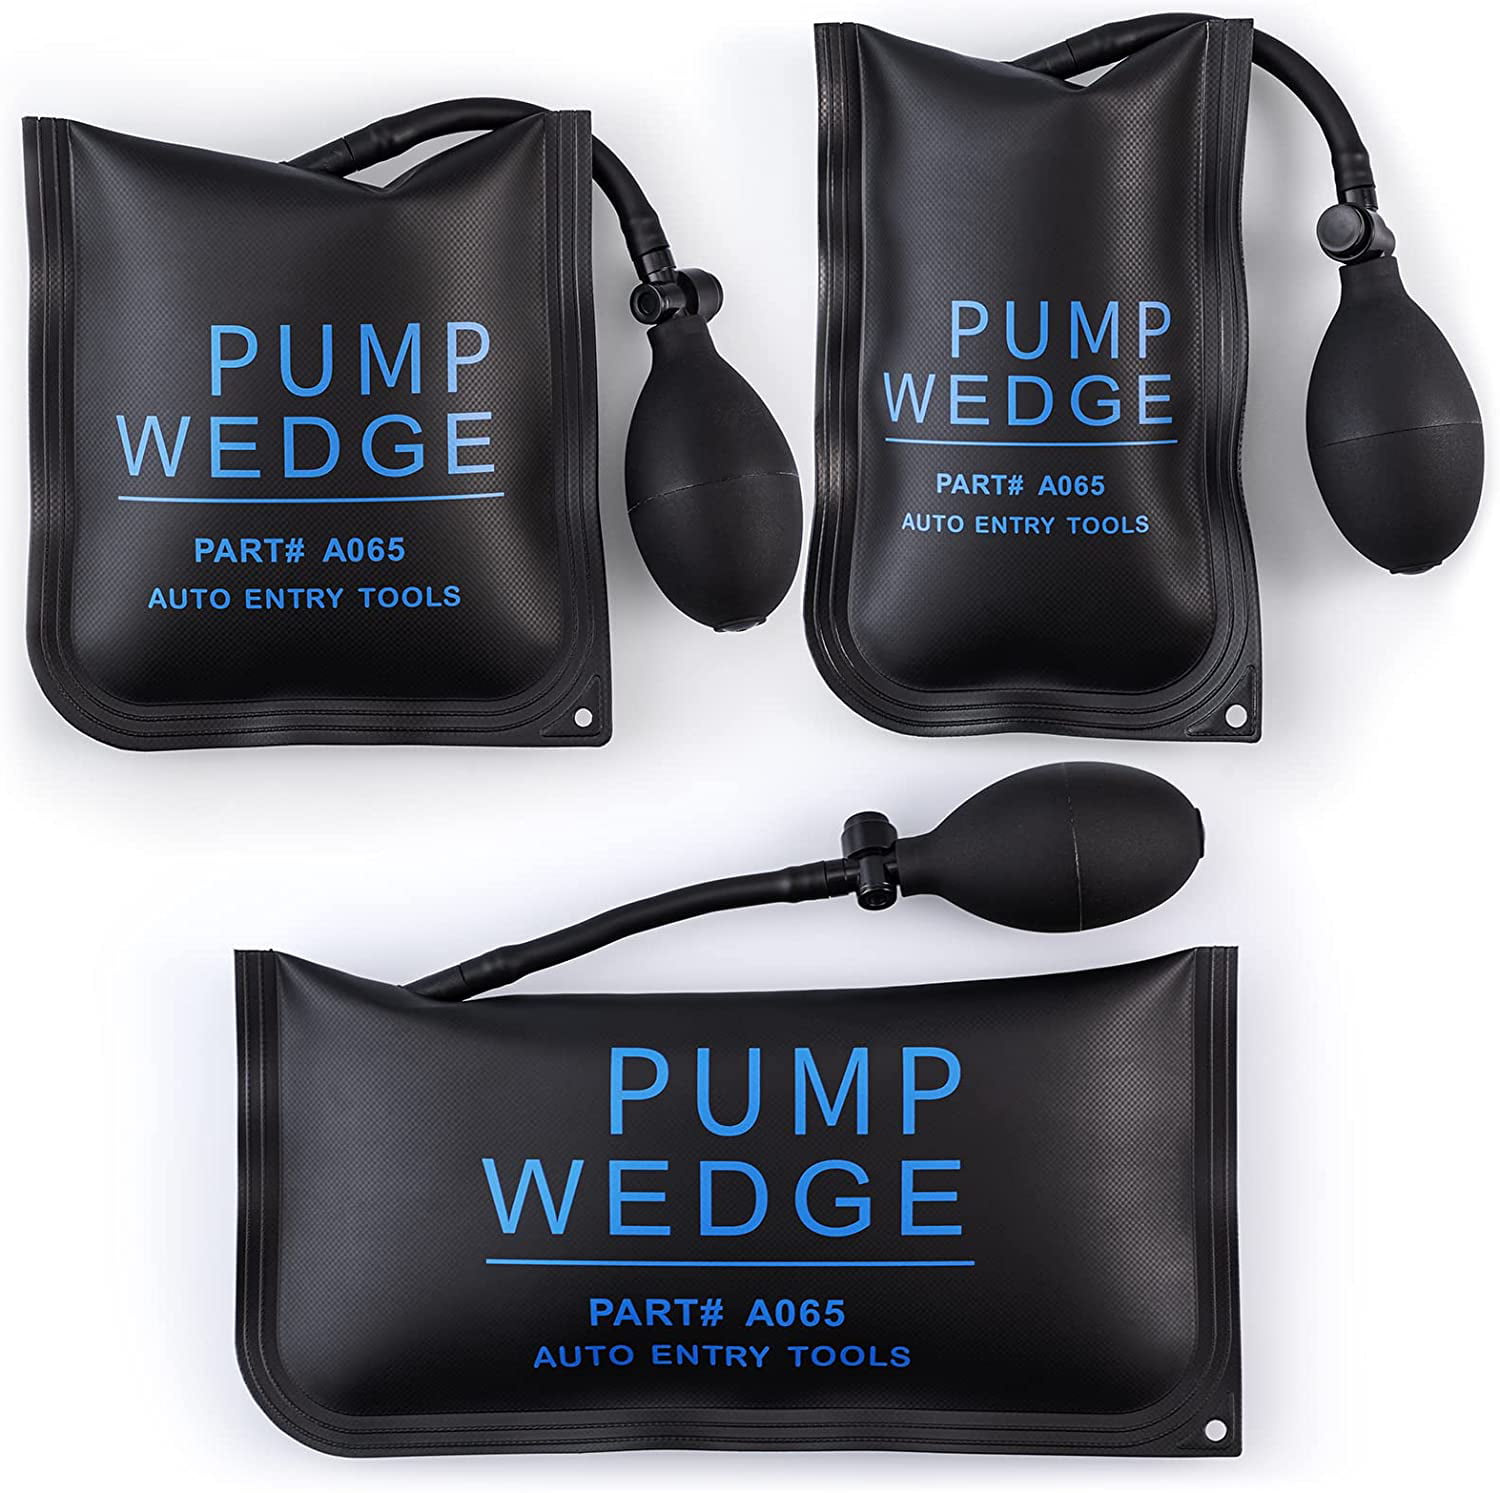 Air Wedge Bag Pump Leveling Kit and Alignment Tool Inflatable Shim Bag 3Pcs 